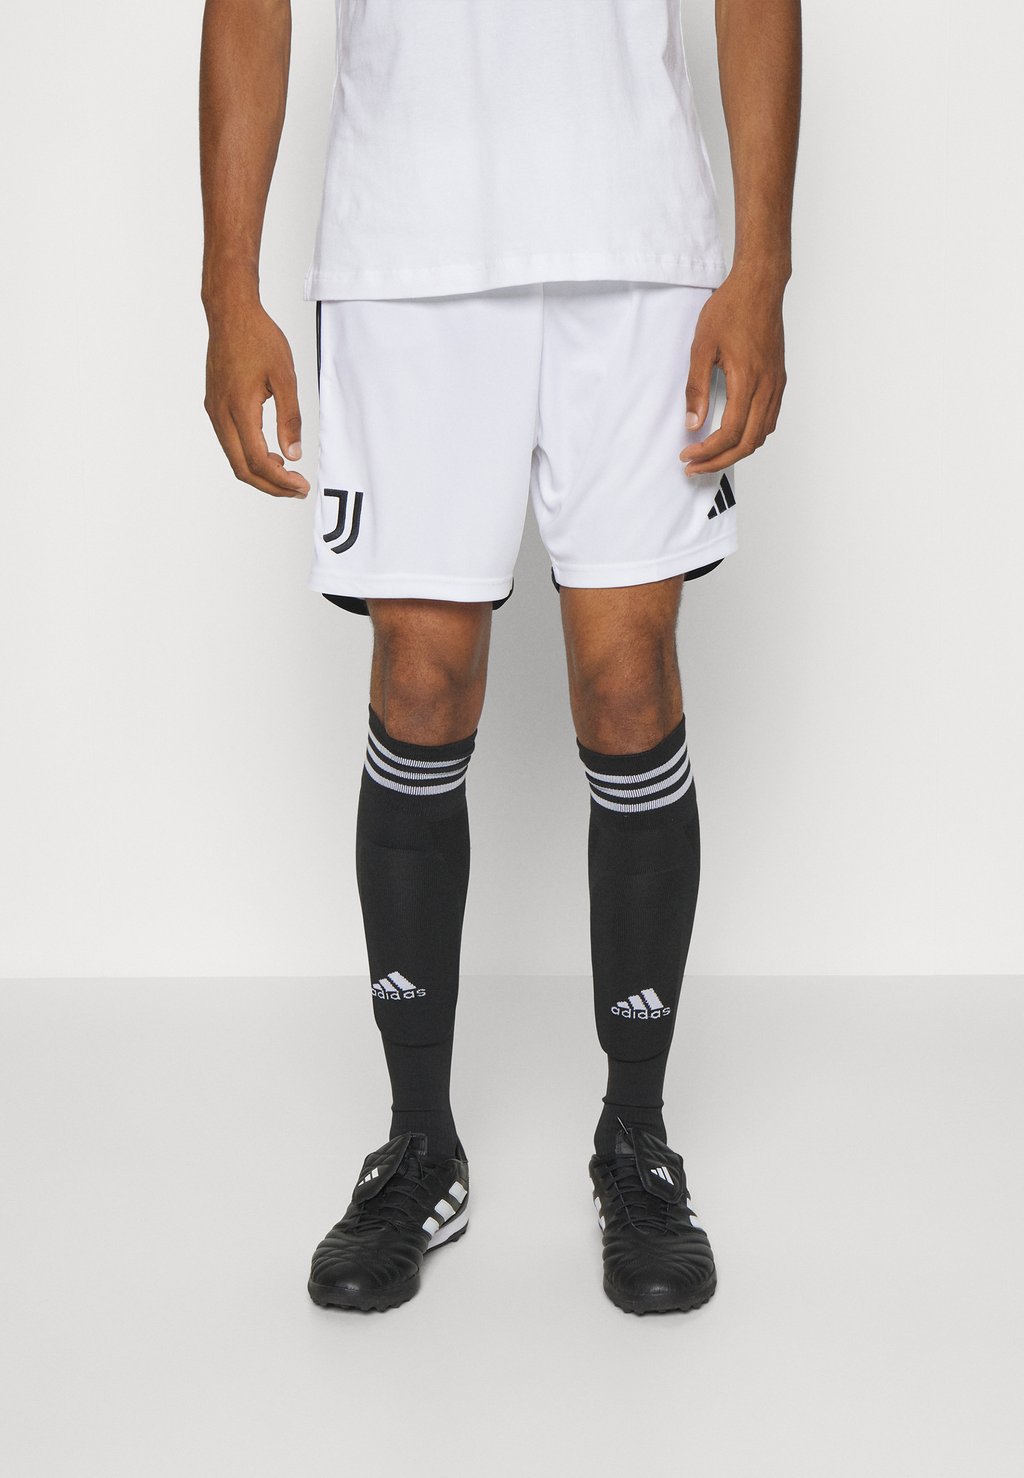 Спортивные шорты Juventus Turin Away Adidas, белый